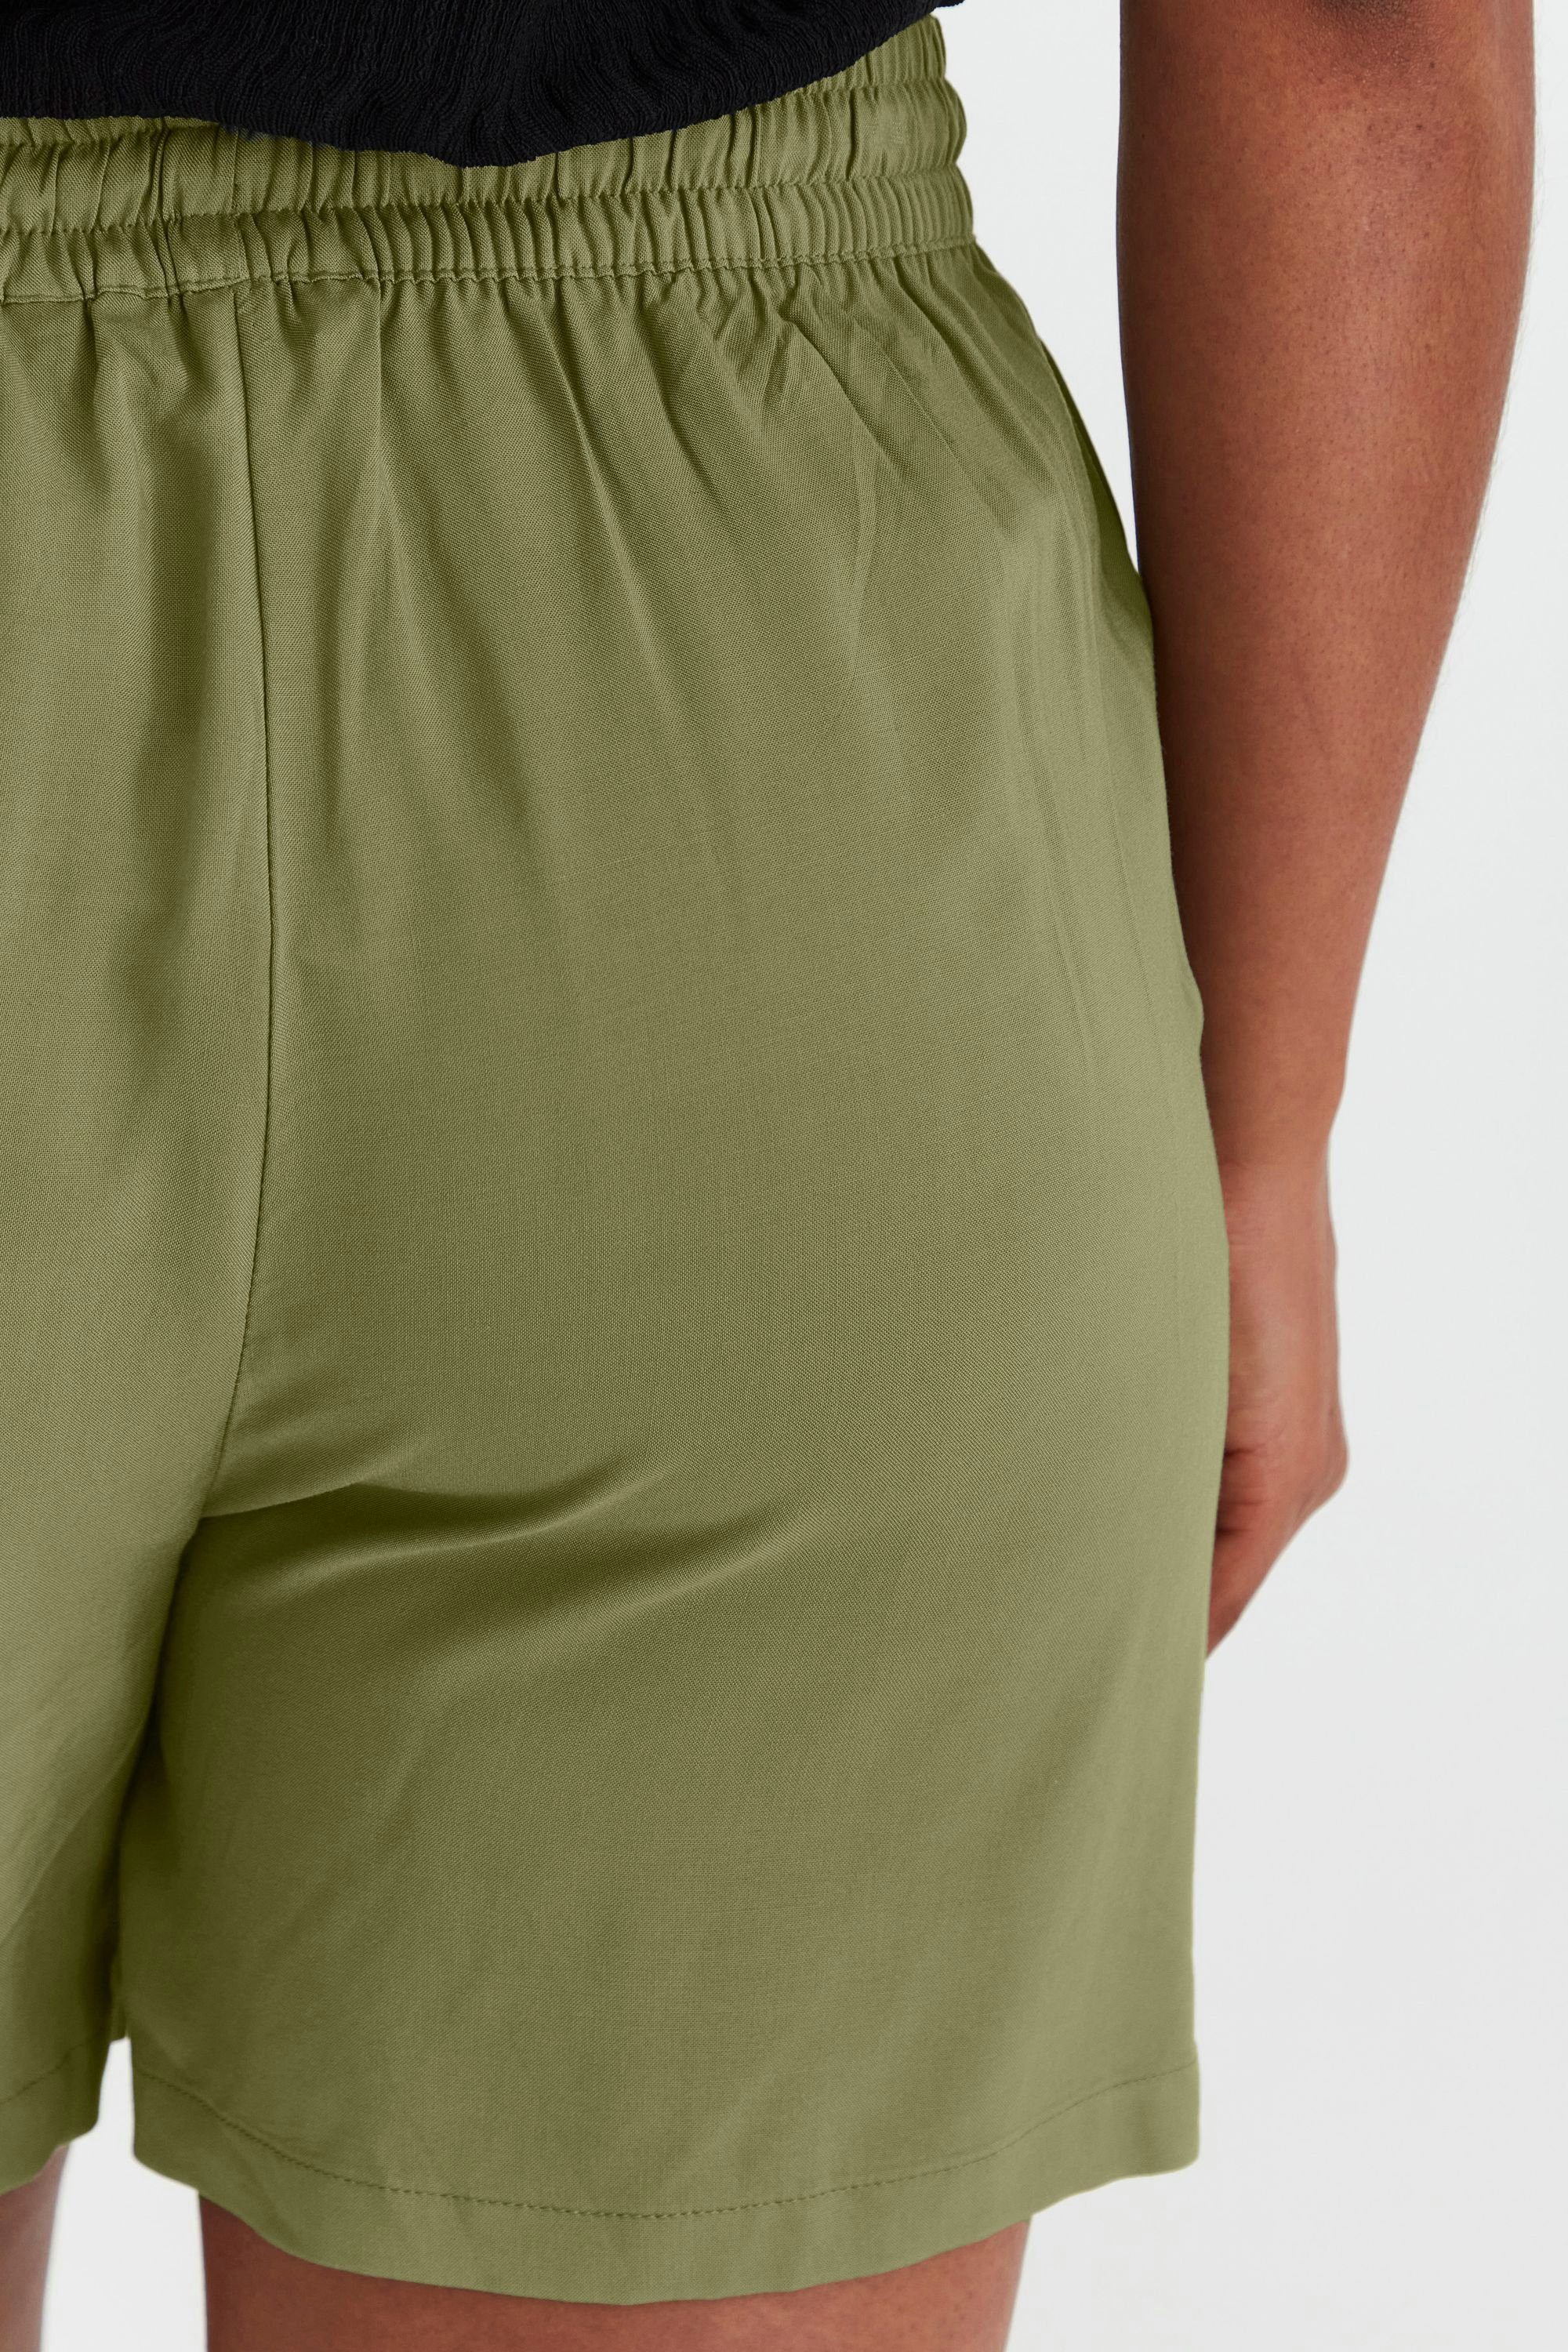 Shorts Green b.young Muster SHORTS mit (170115) - BYMMJOELLA Luftige 20809730 Shorts Oil